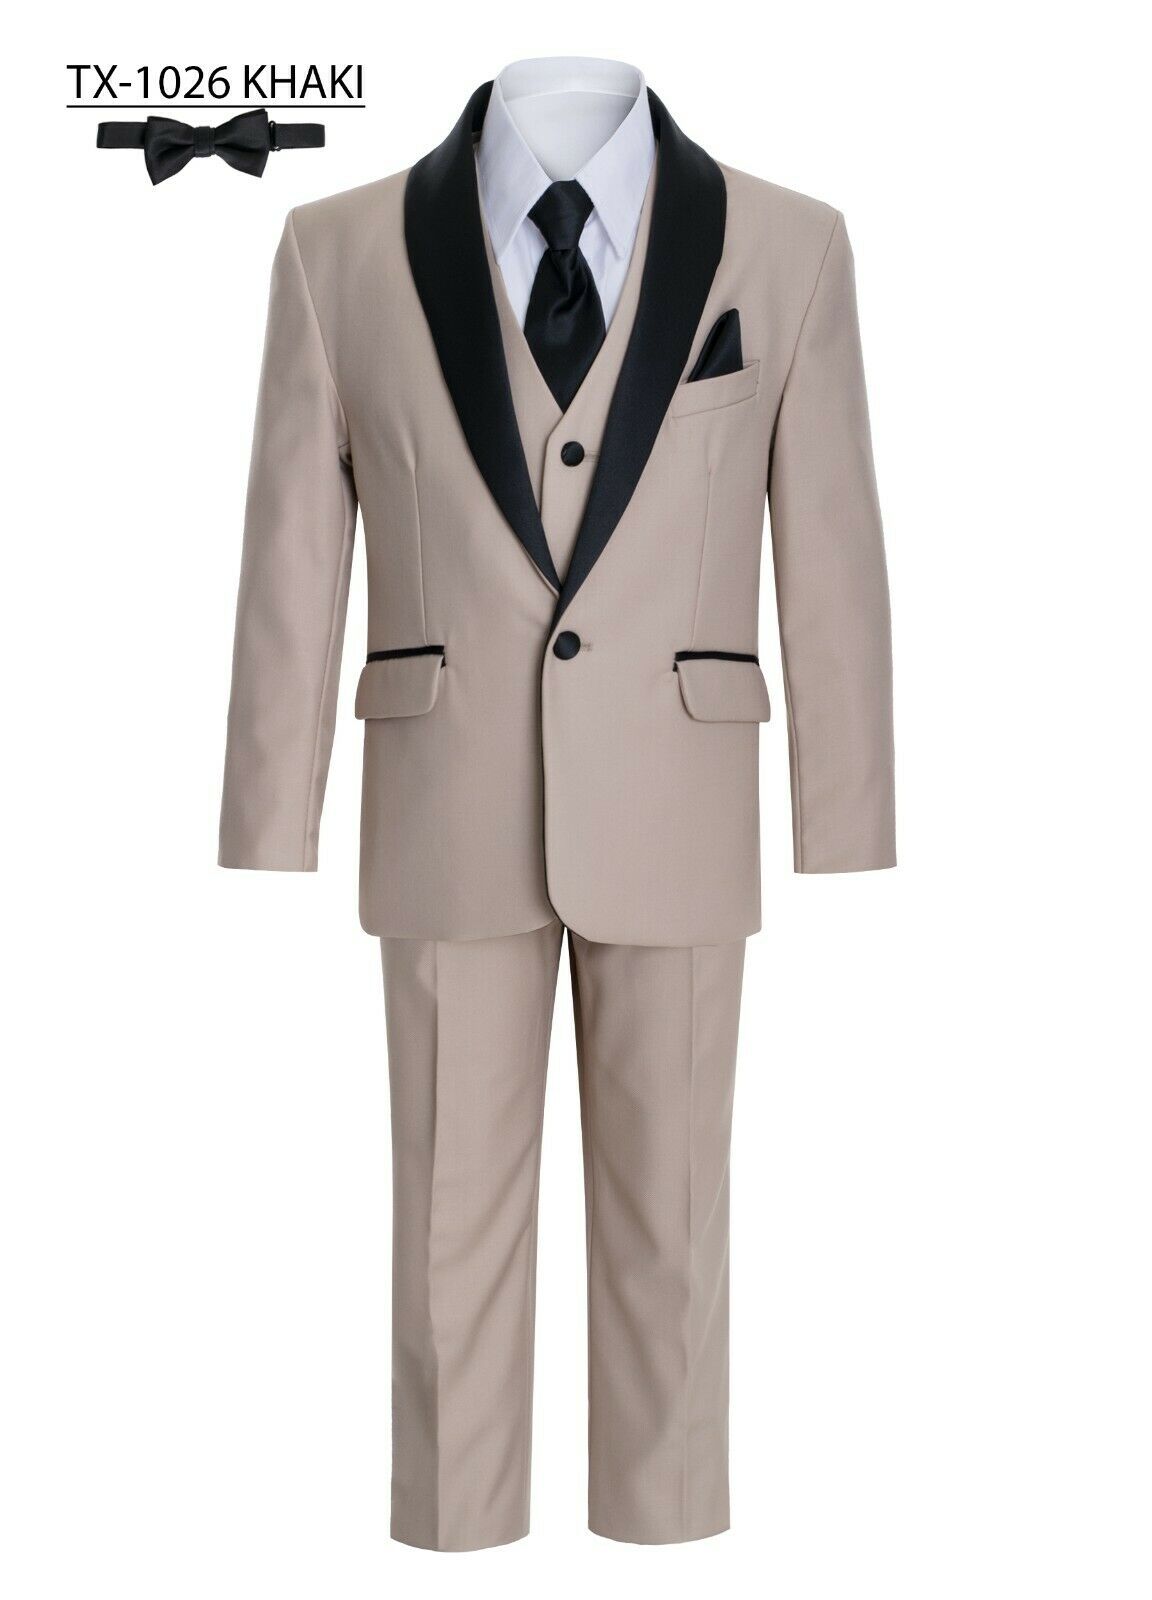 The Khaki/Beige Shawl Tuxedo Suit, a symbol of classic elegance for a boy.